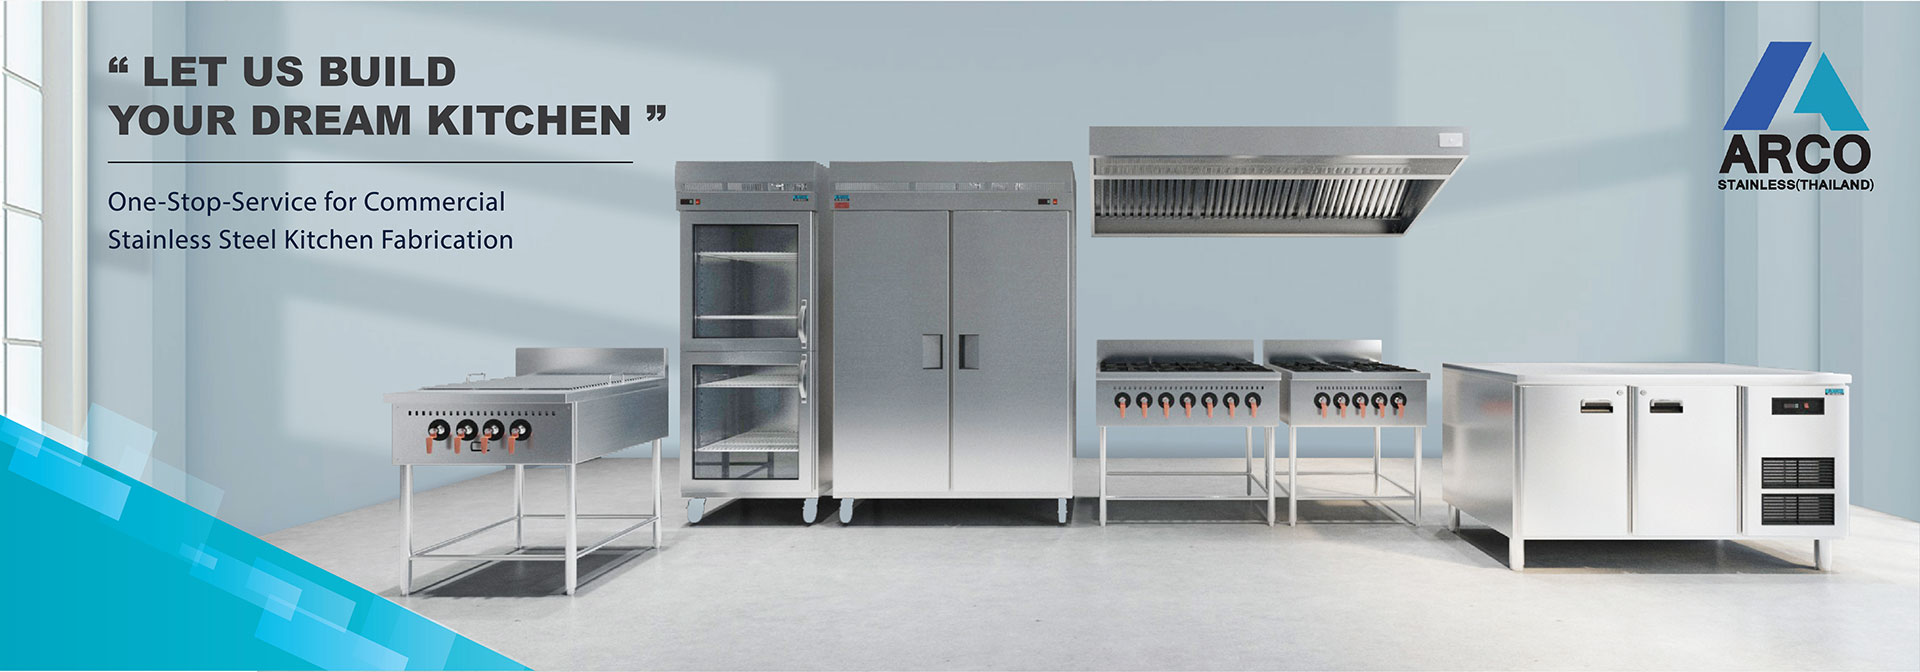 Commercial refrigerators ARCO Thailand